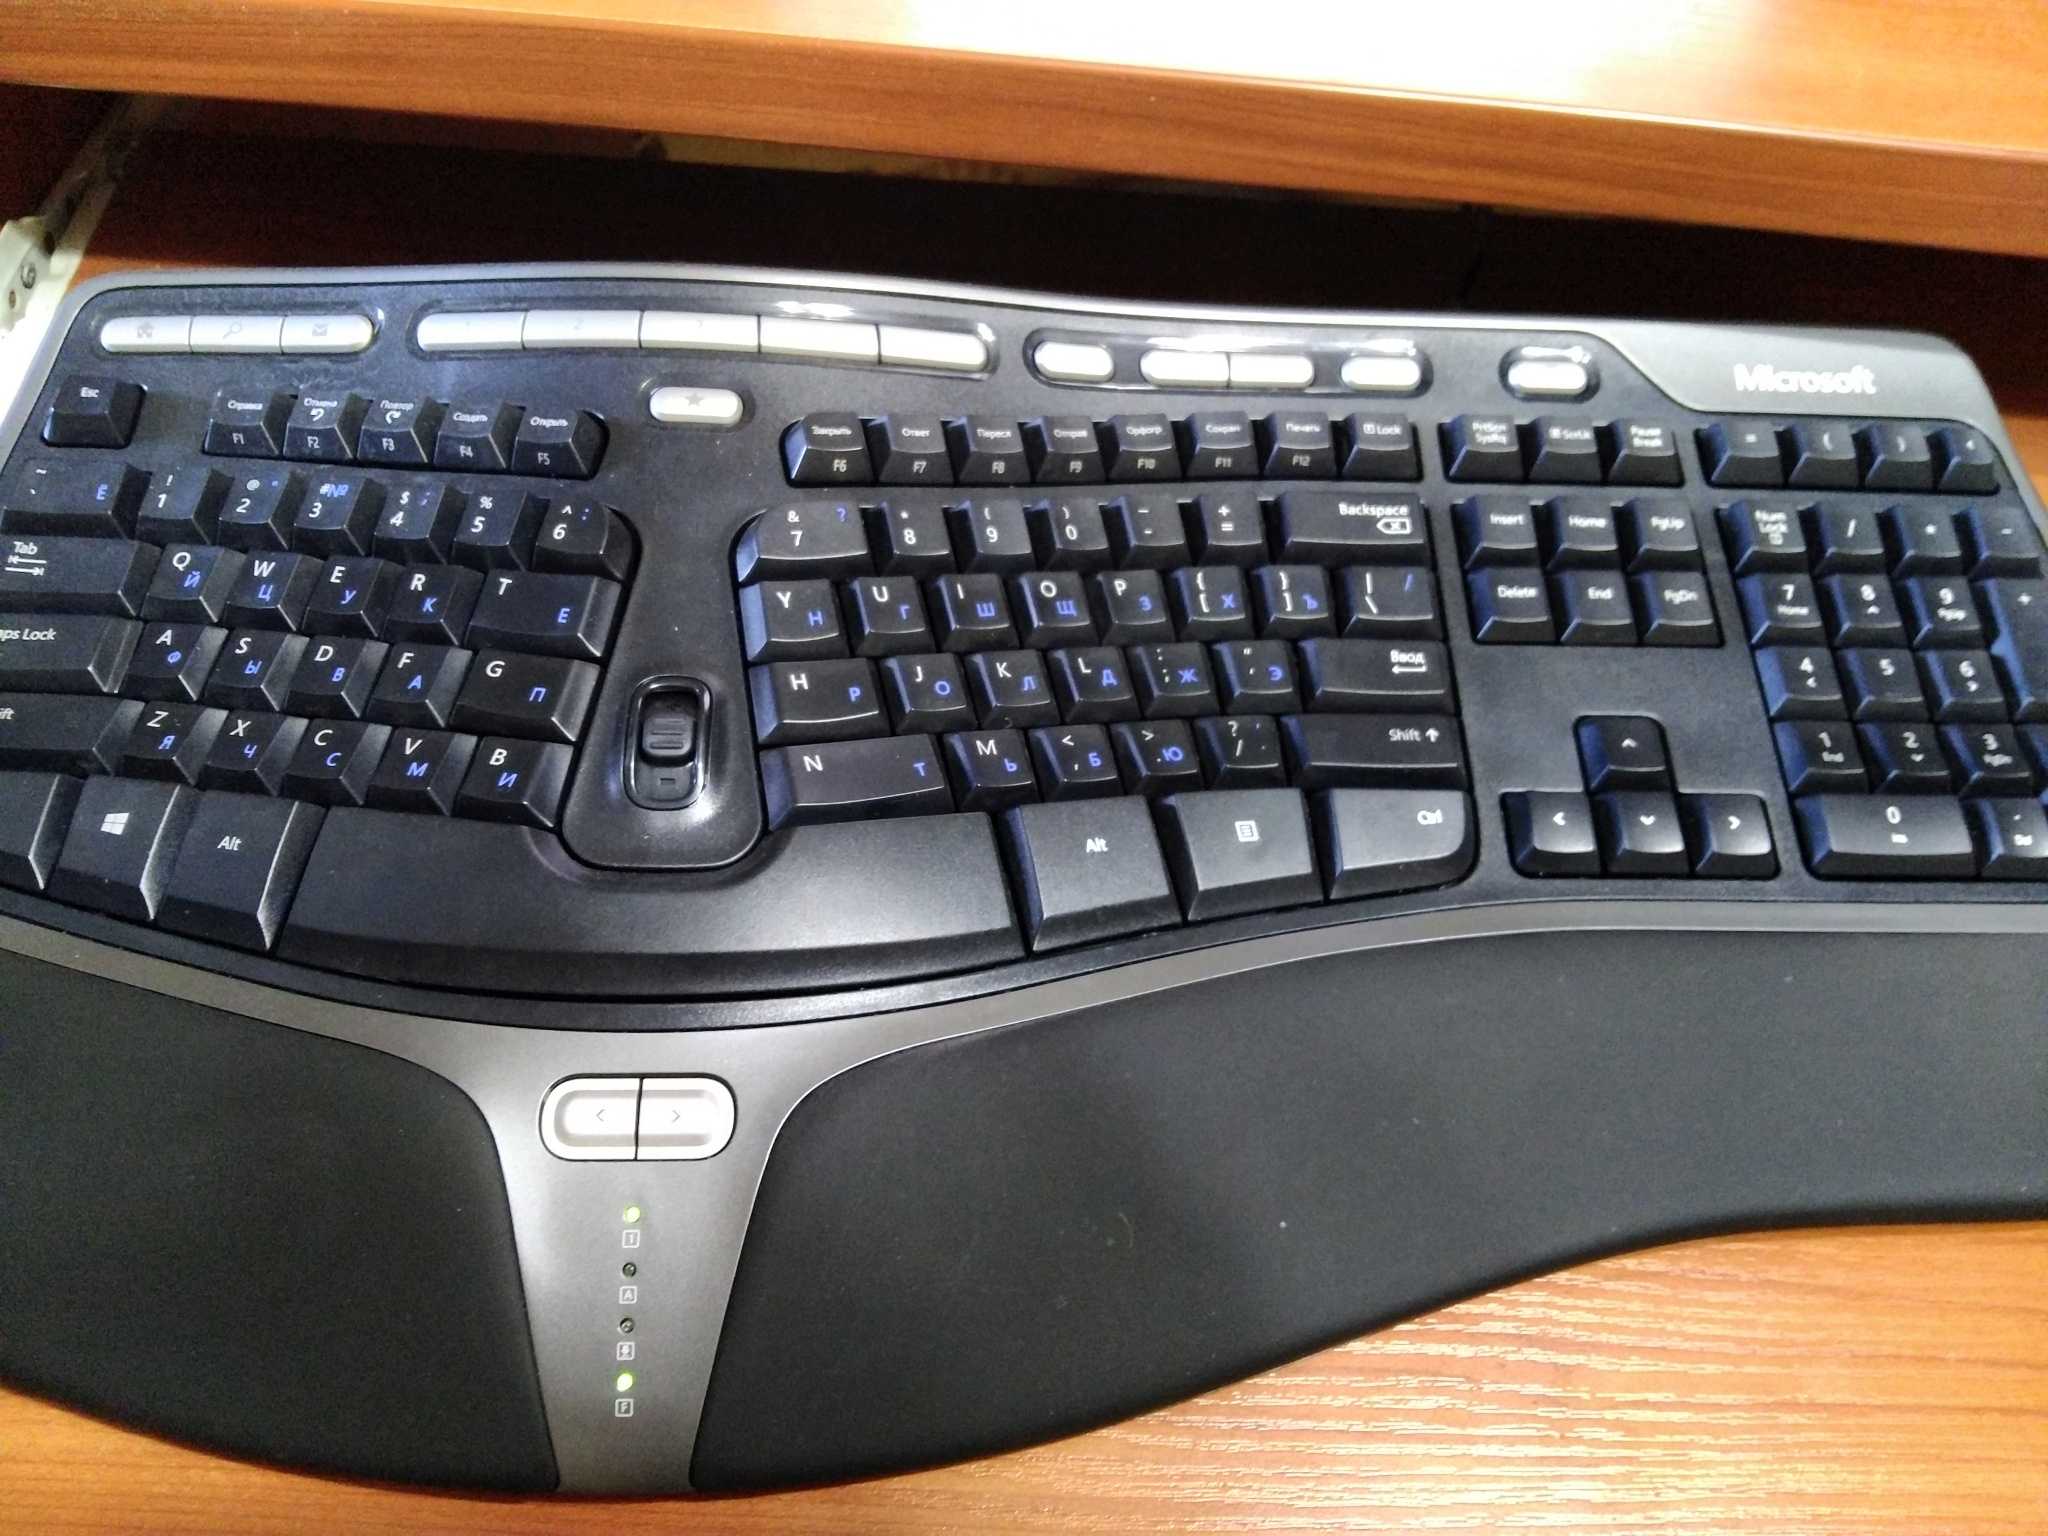 Microsoft natural ergonomic keyboard 4000 black usb отзывы покупателей и специалистов на отзовик